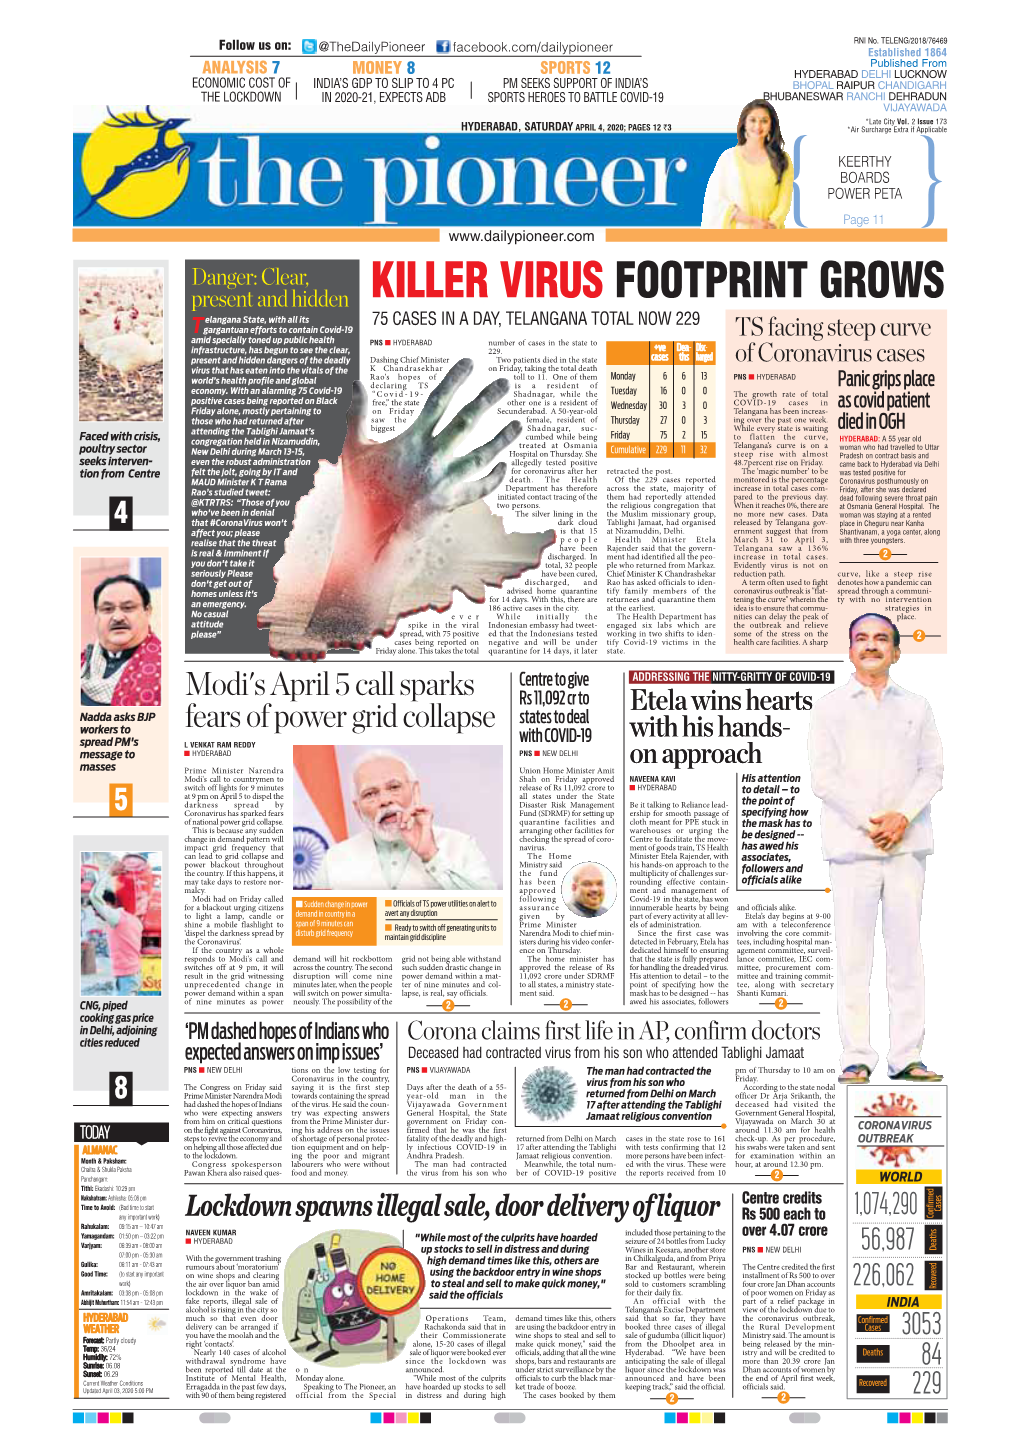 Killer Virus Footprint Grows